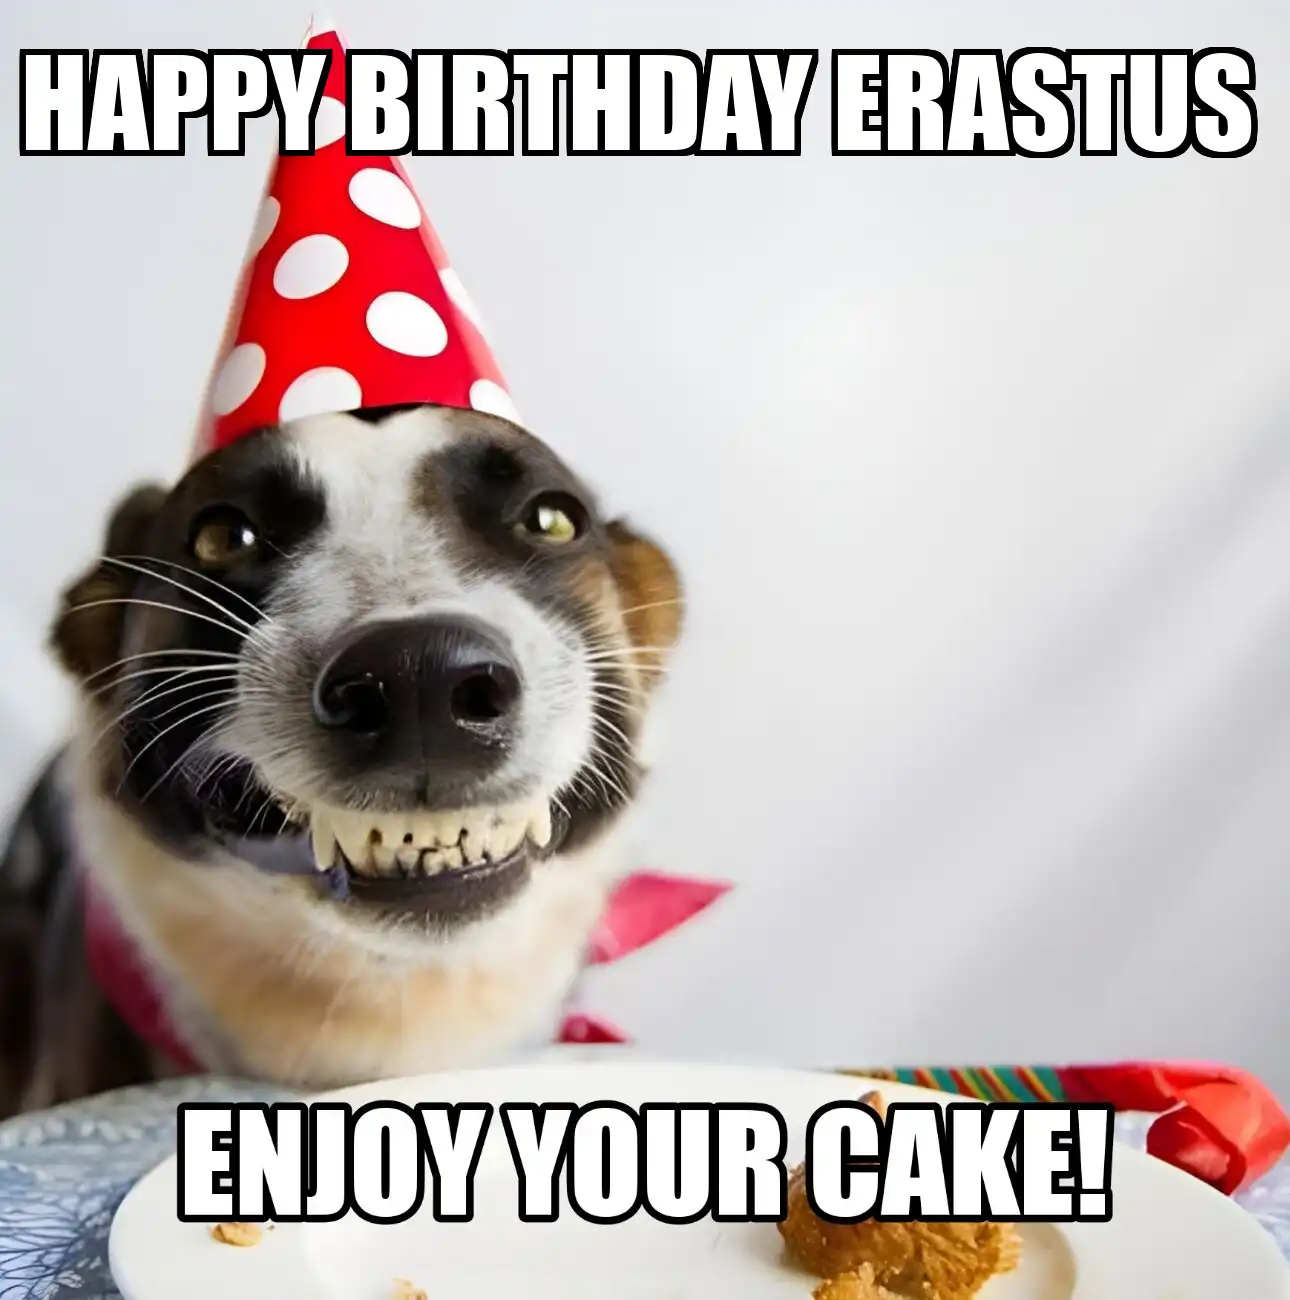 Happy Birthday Erastus Enjoy Your Cake Dog Meme